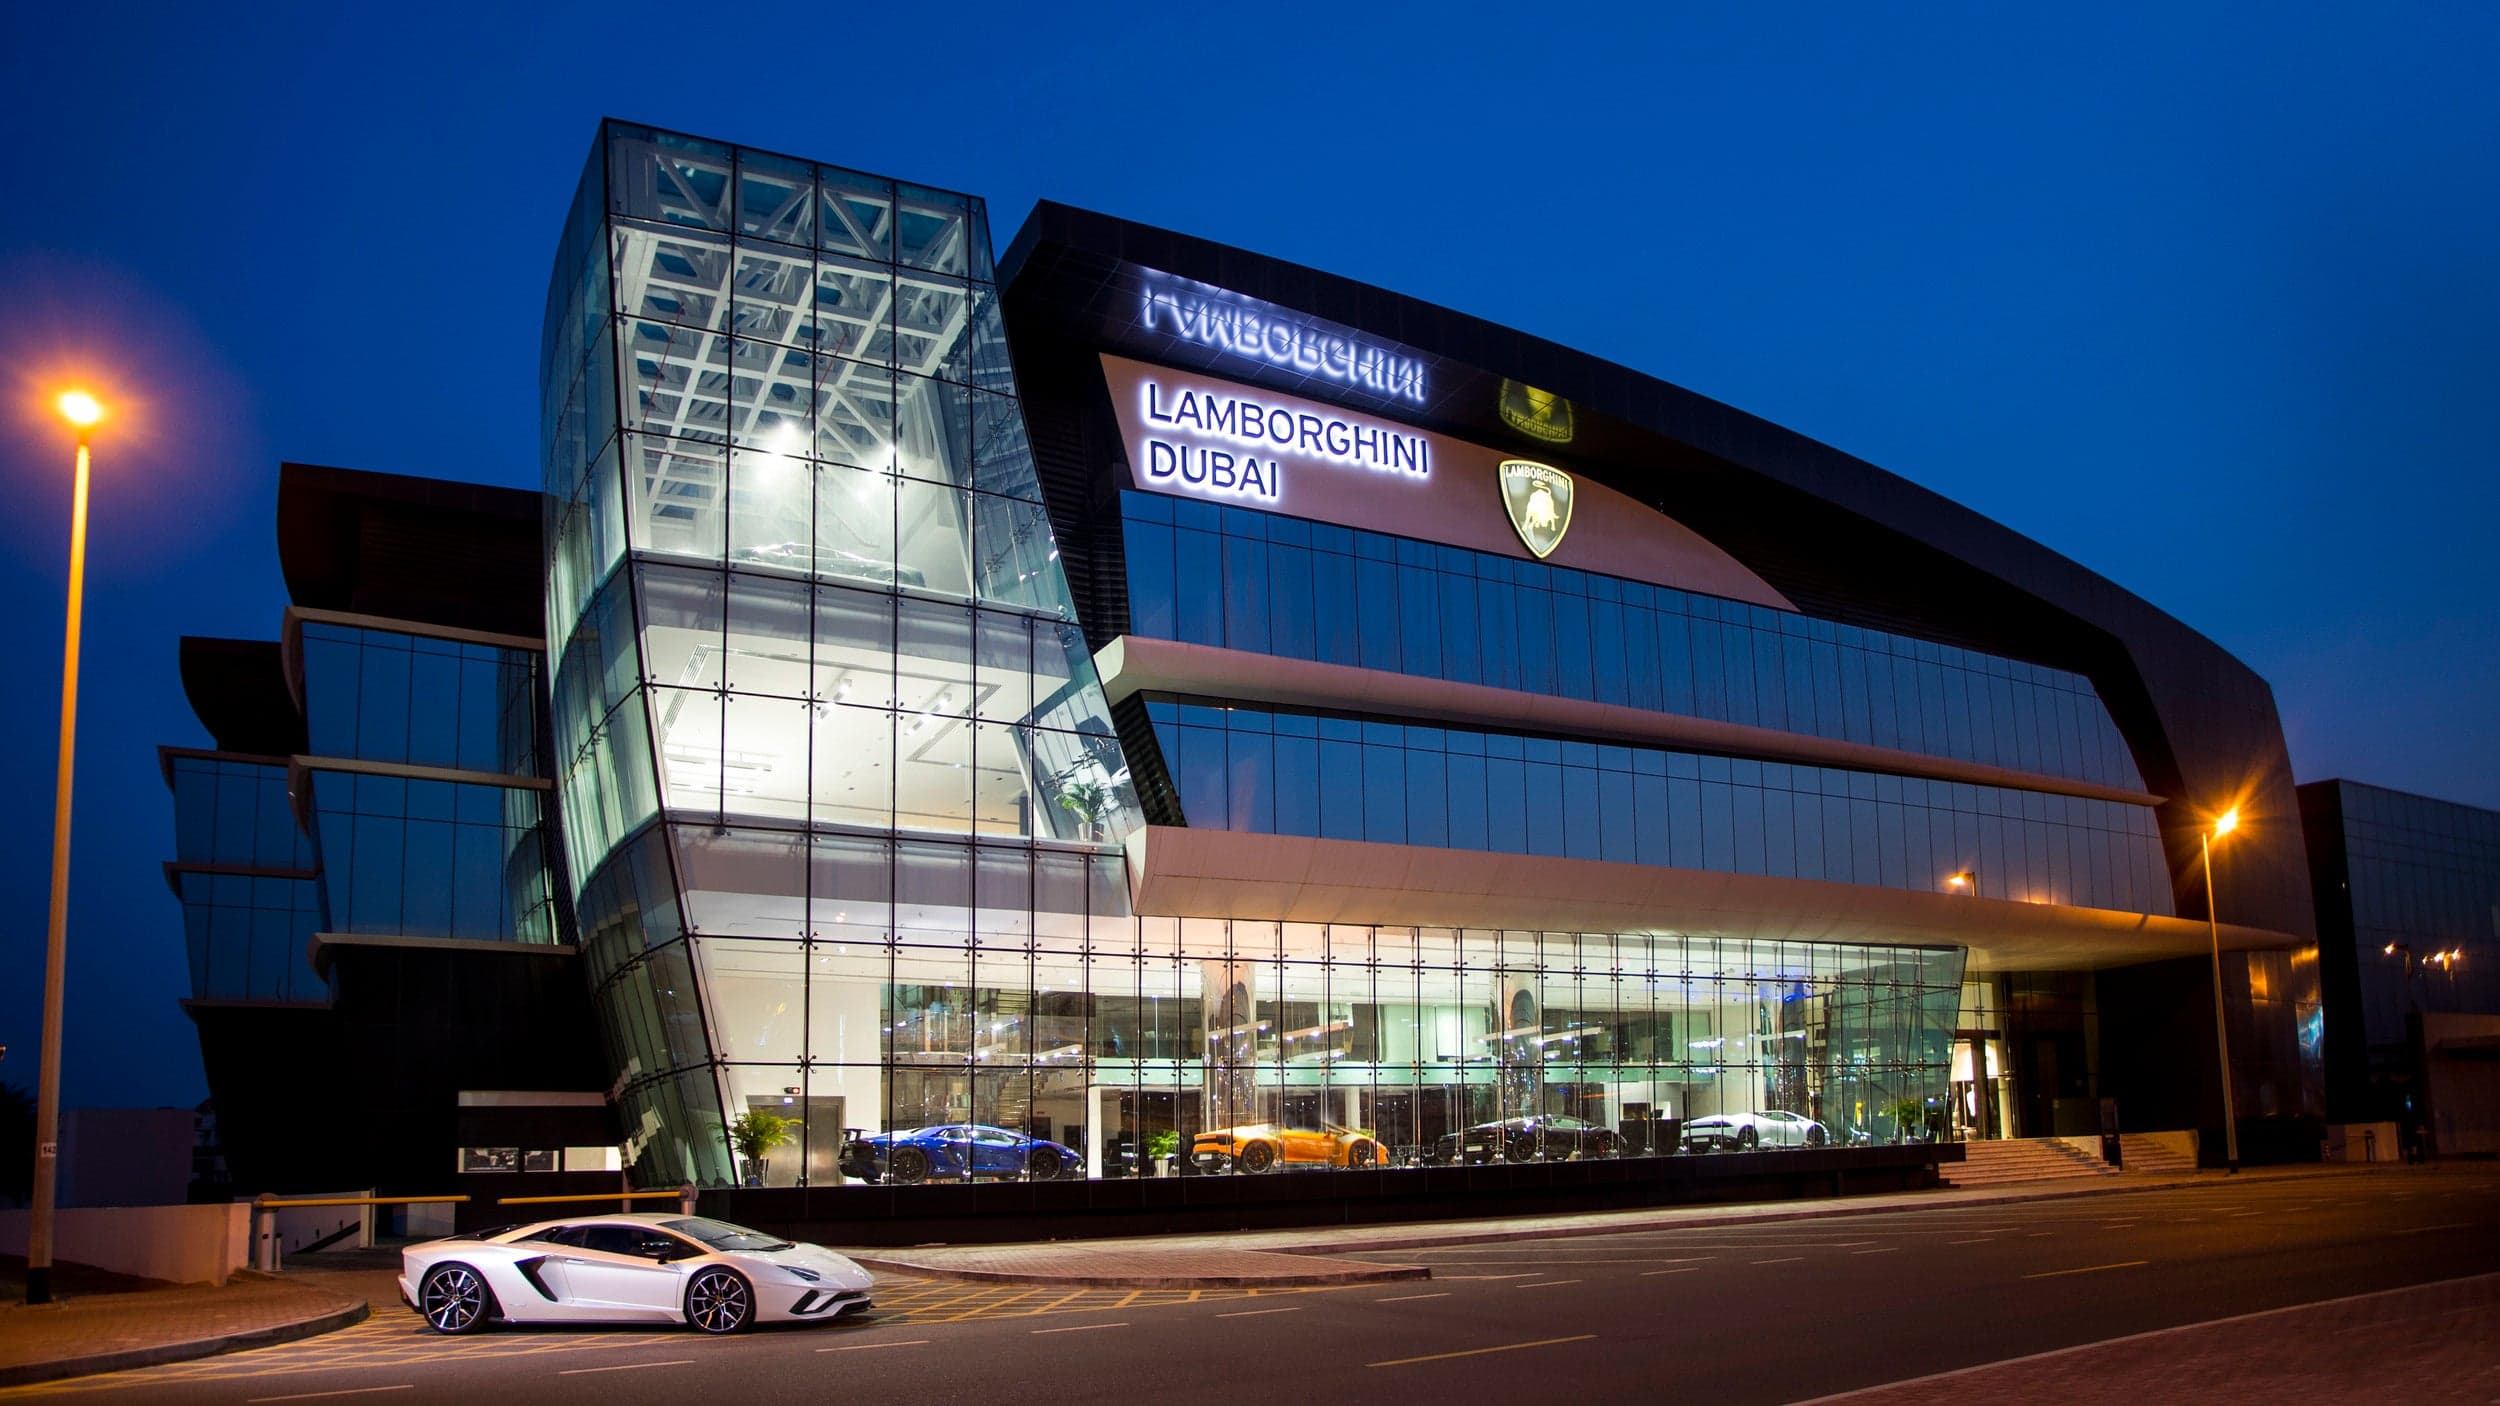 Largest Lamborghini Dealership on Earth Built in Dubai